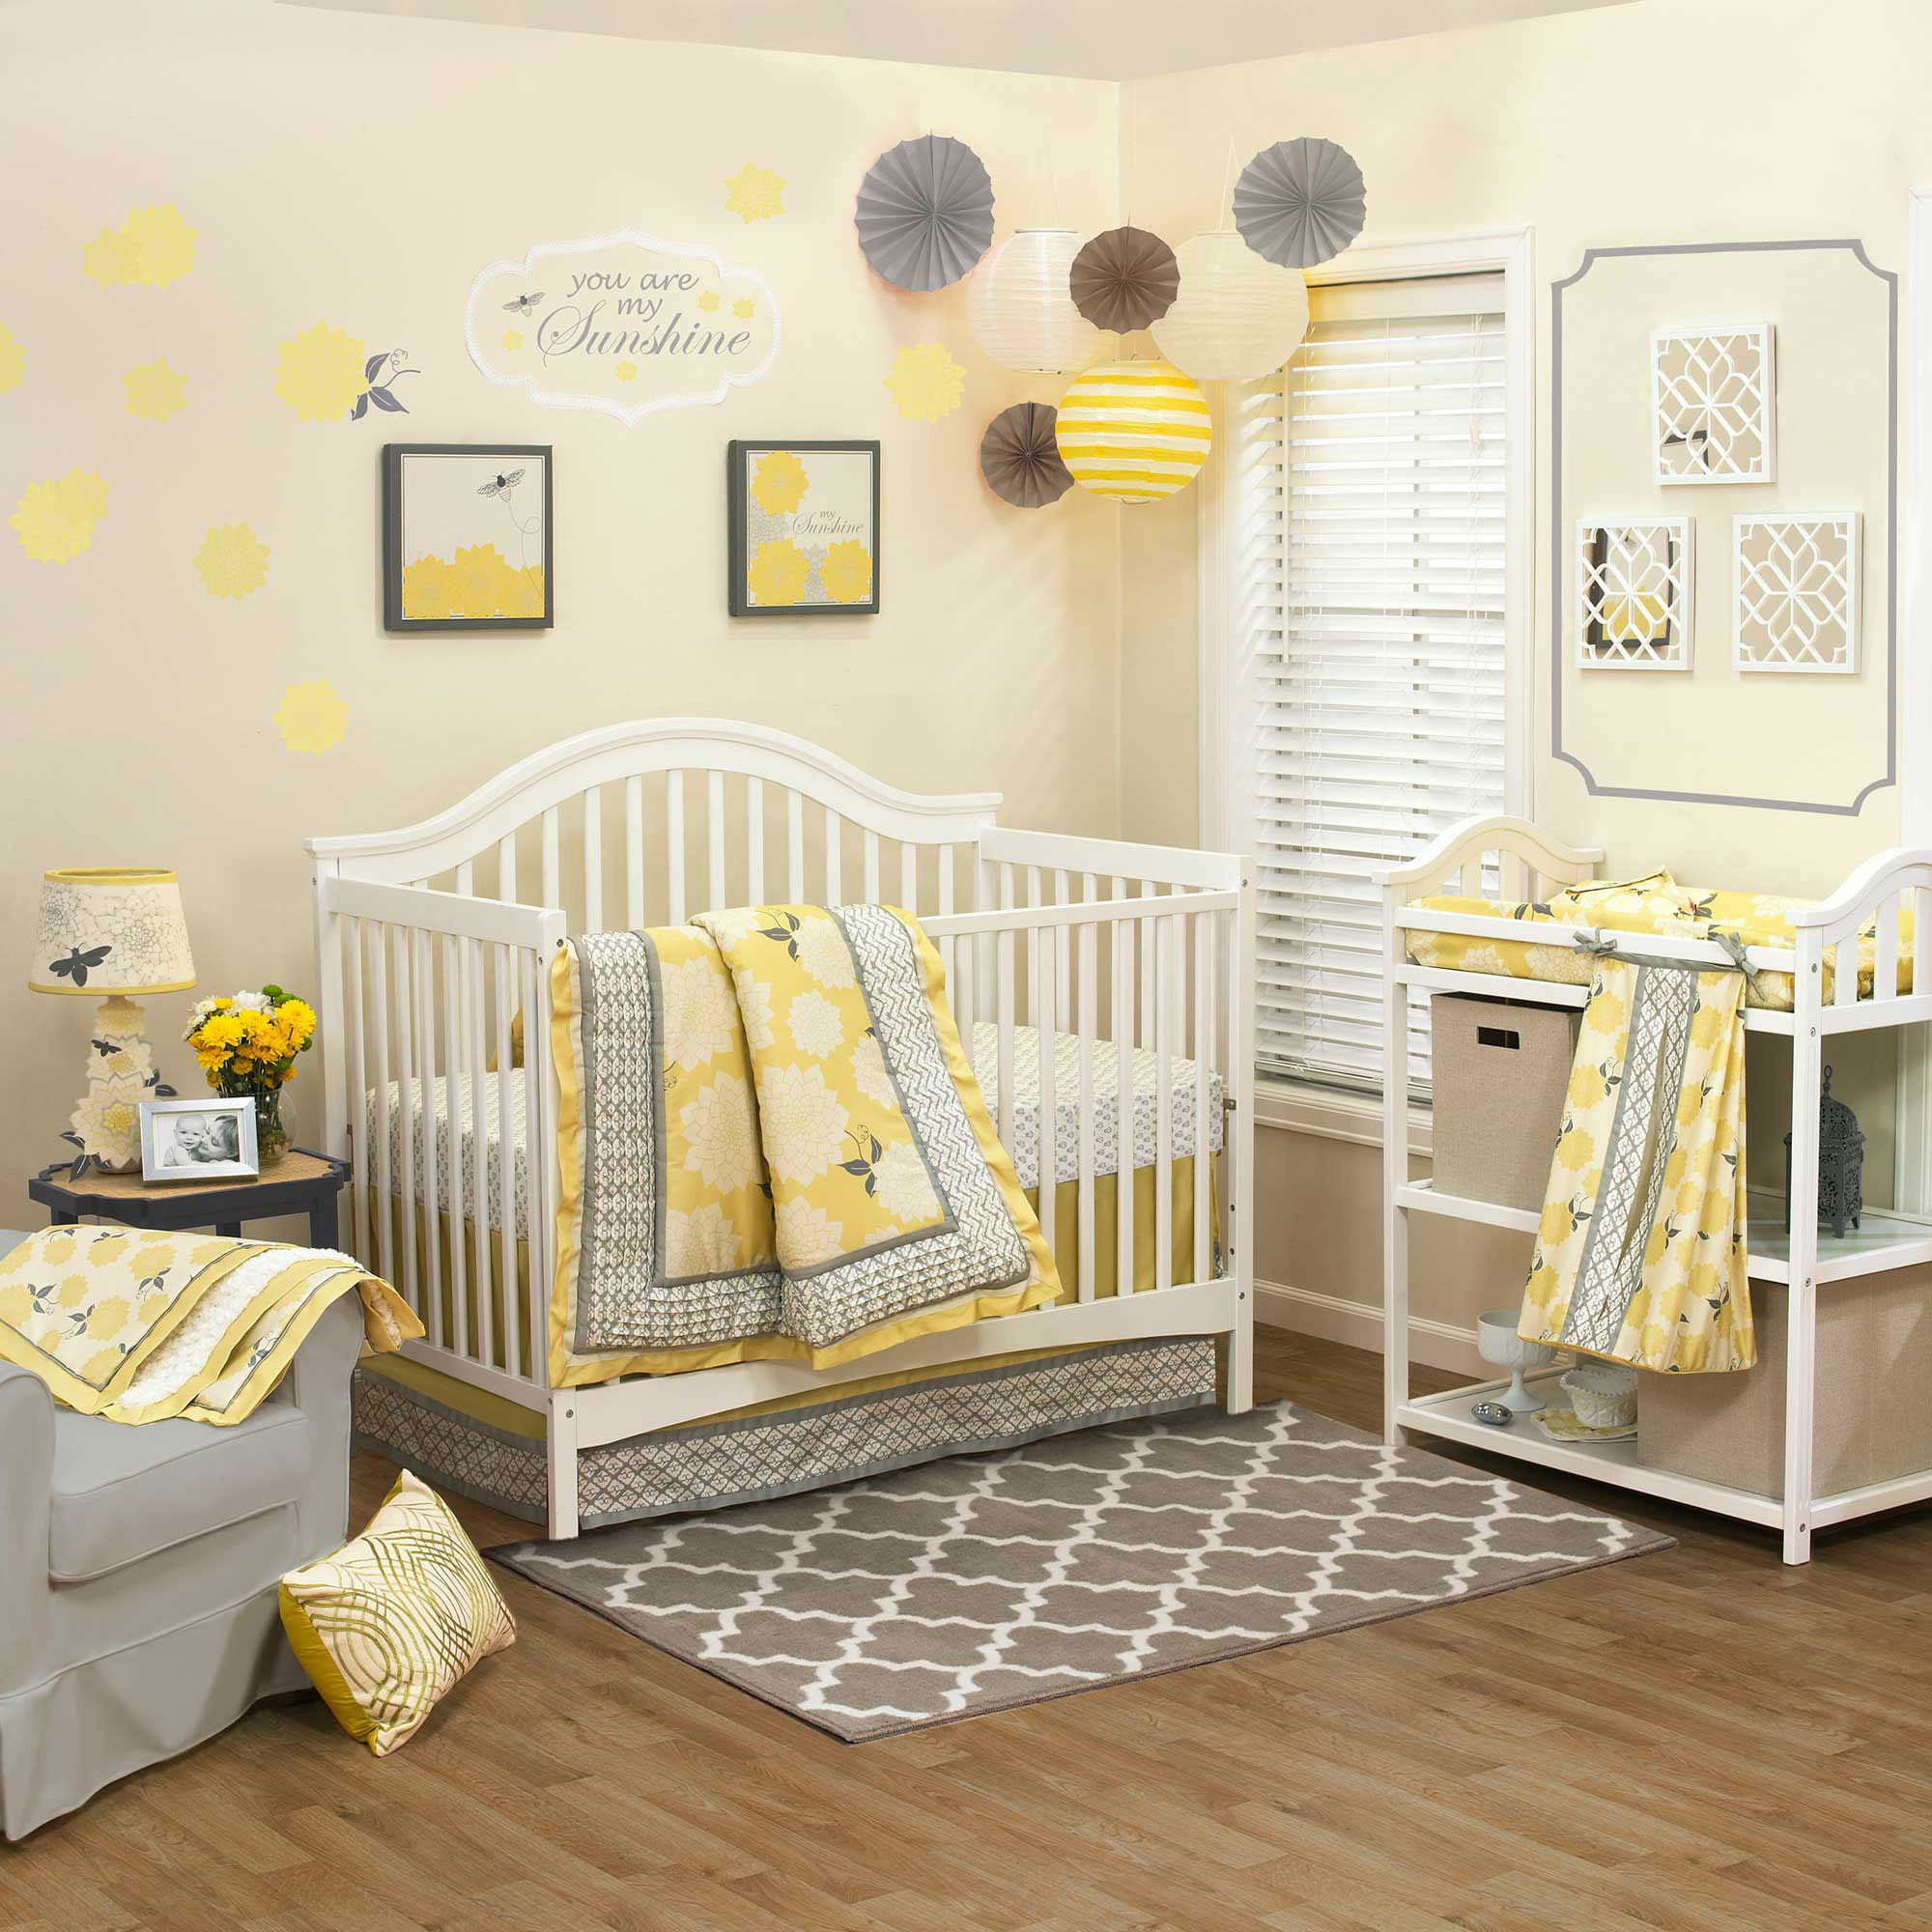 Baby Girl Decor Room
 Baby Girl Nursery Ideas 10 Pretty Examples Decorating Room